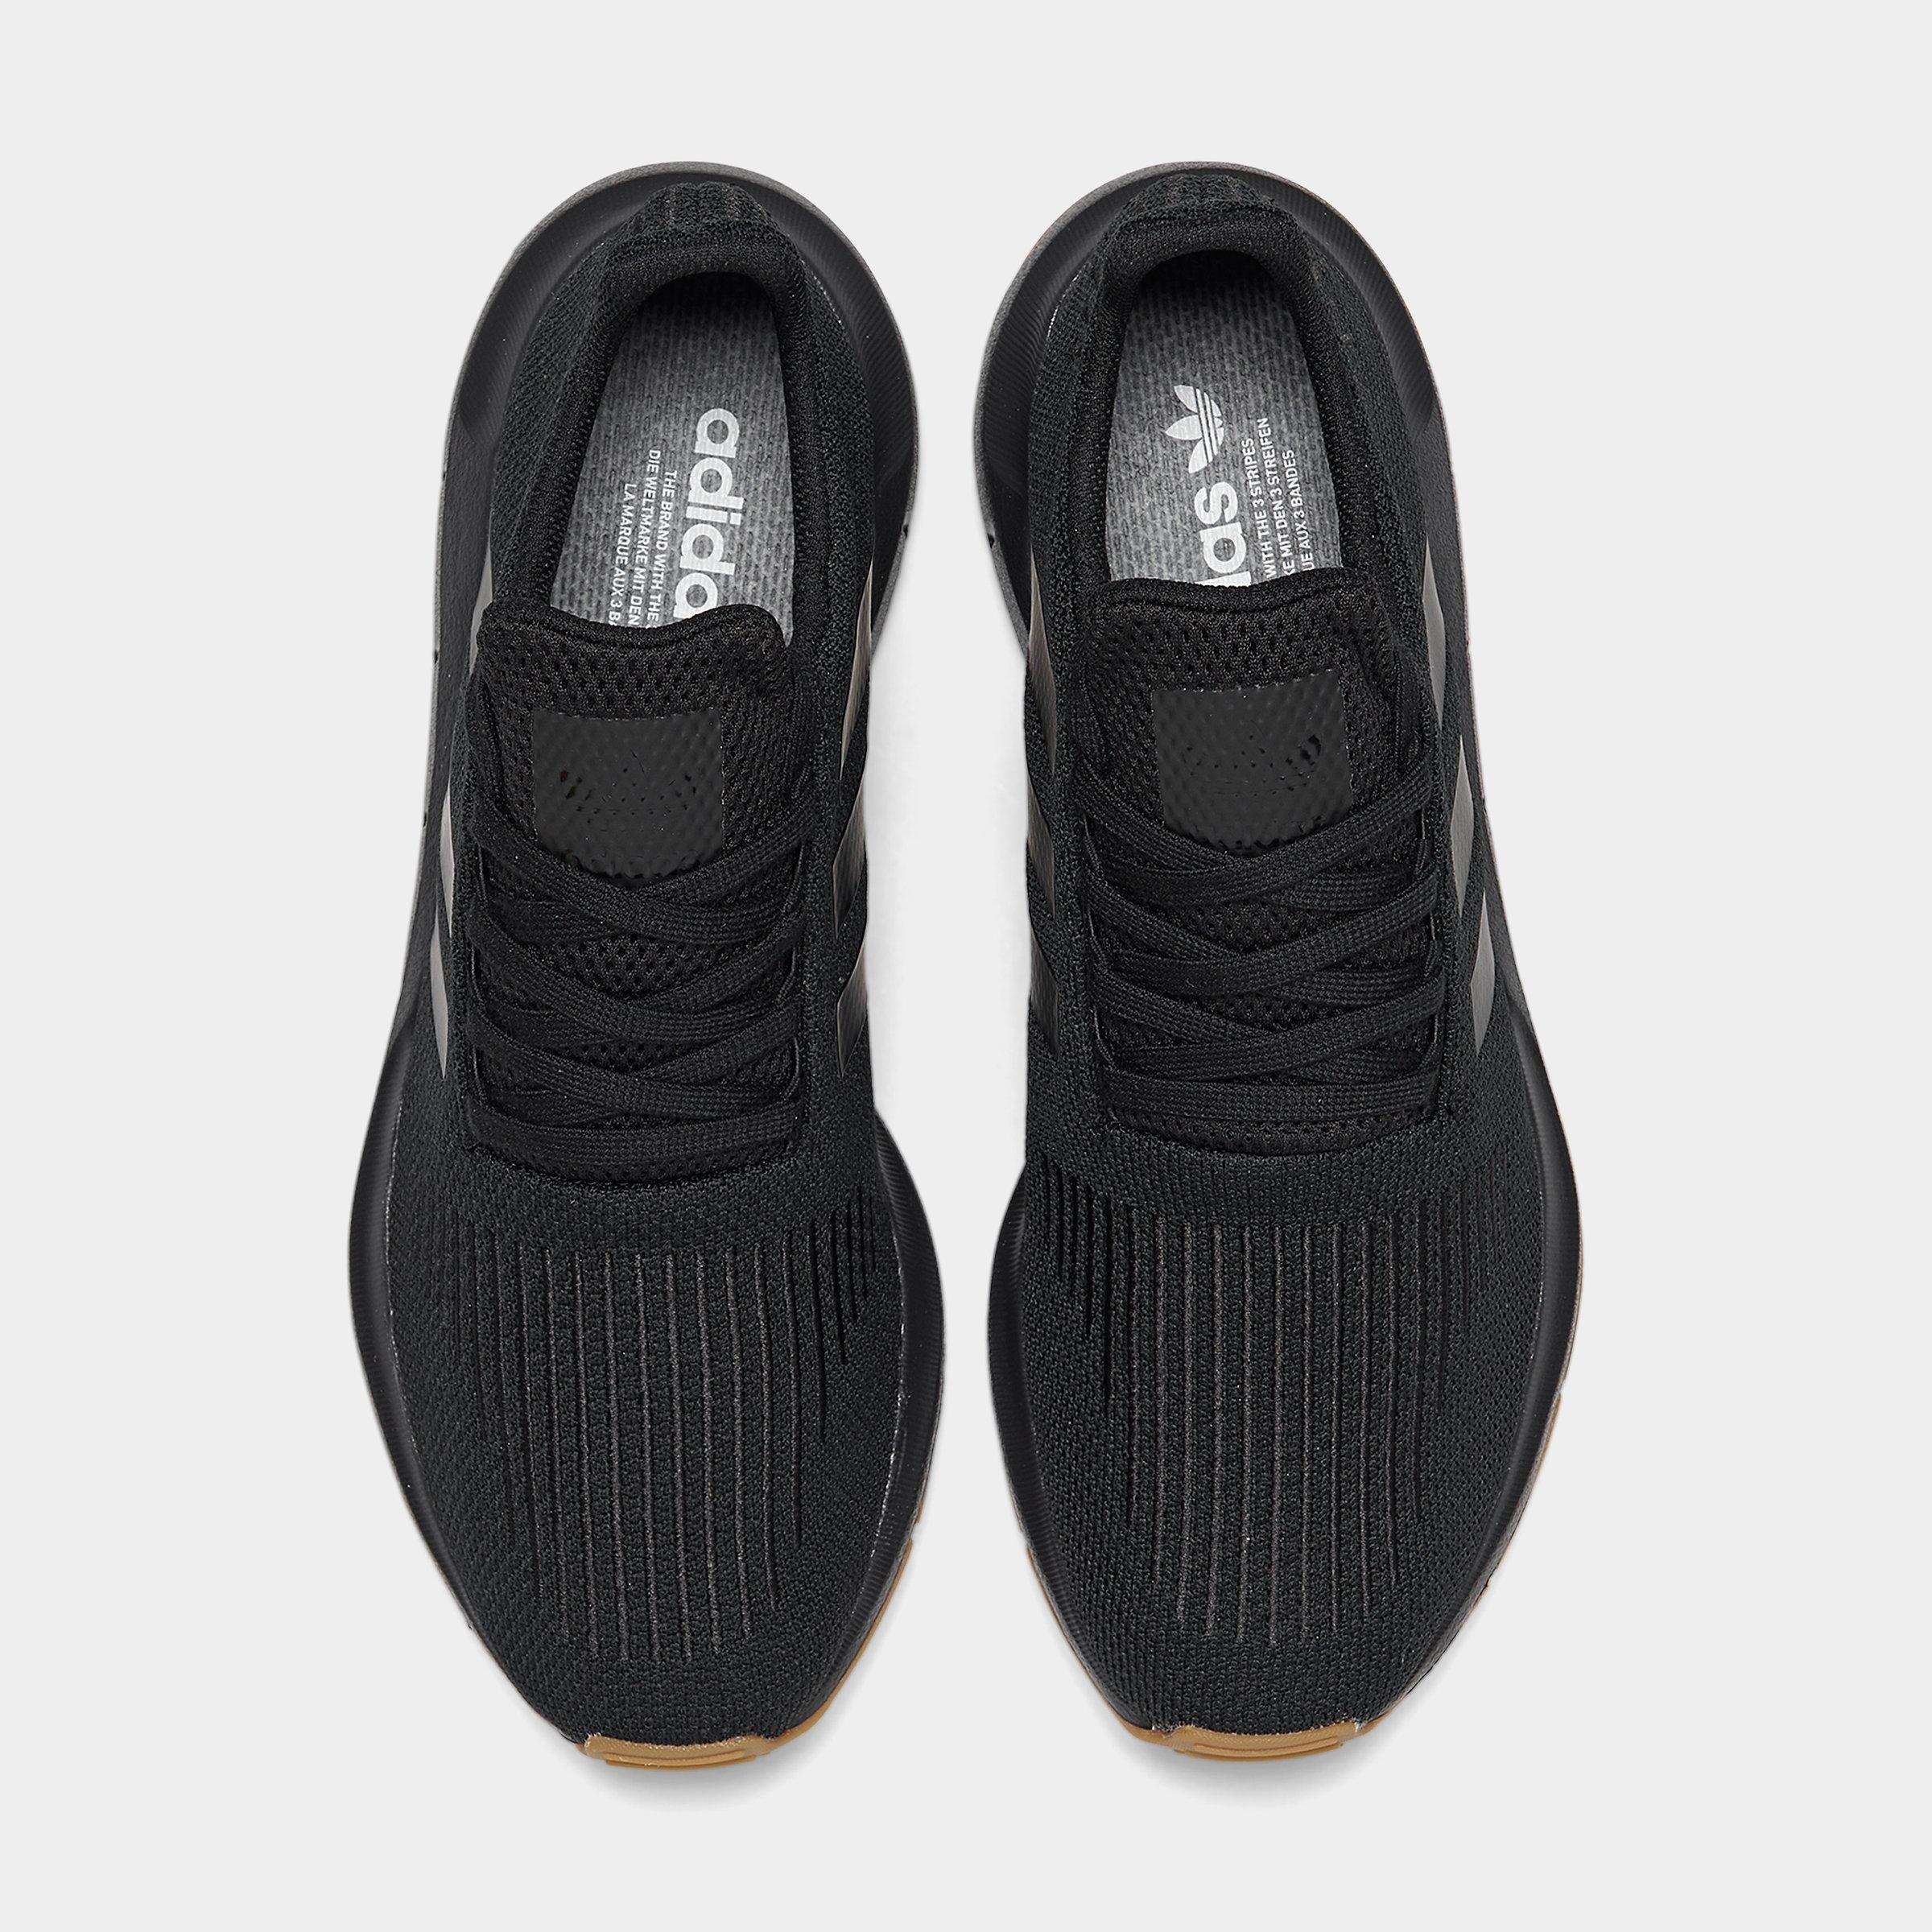 men's adidas running grito shoes